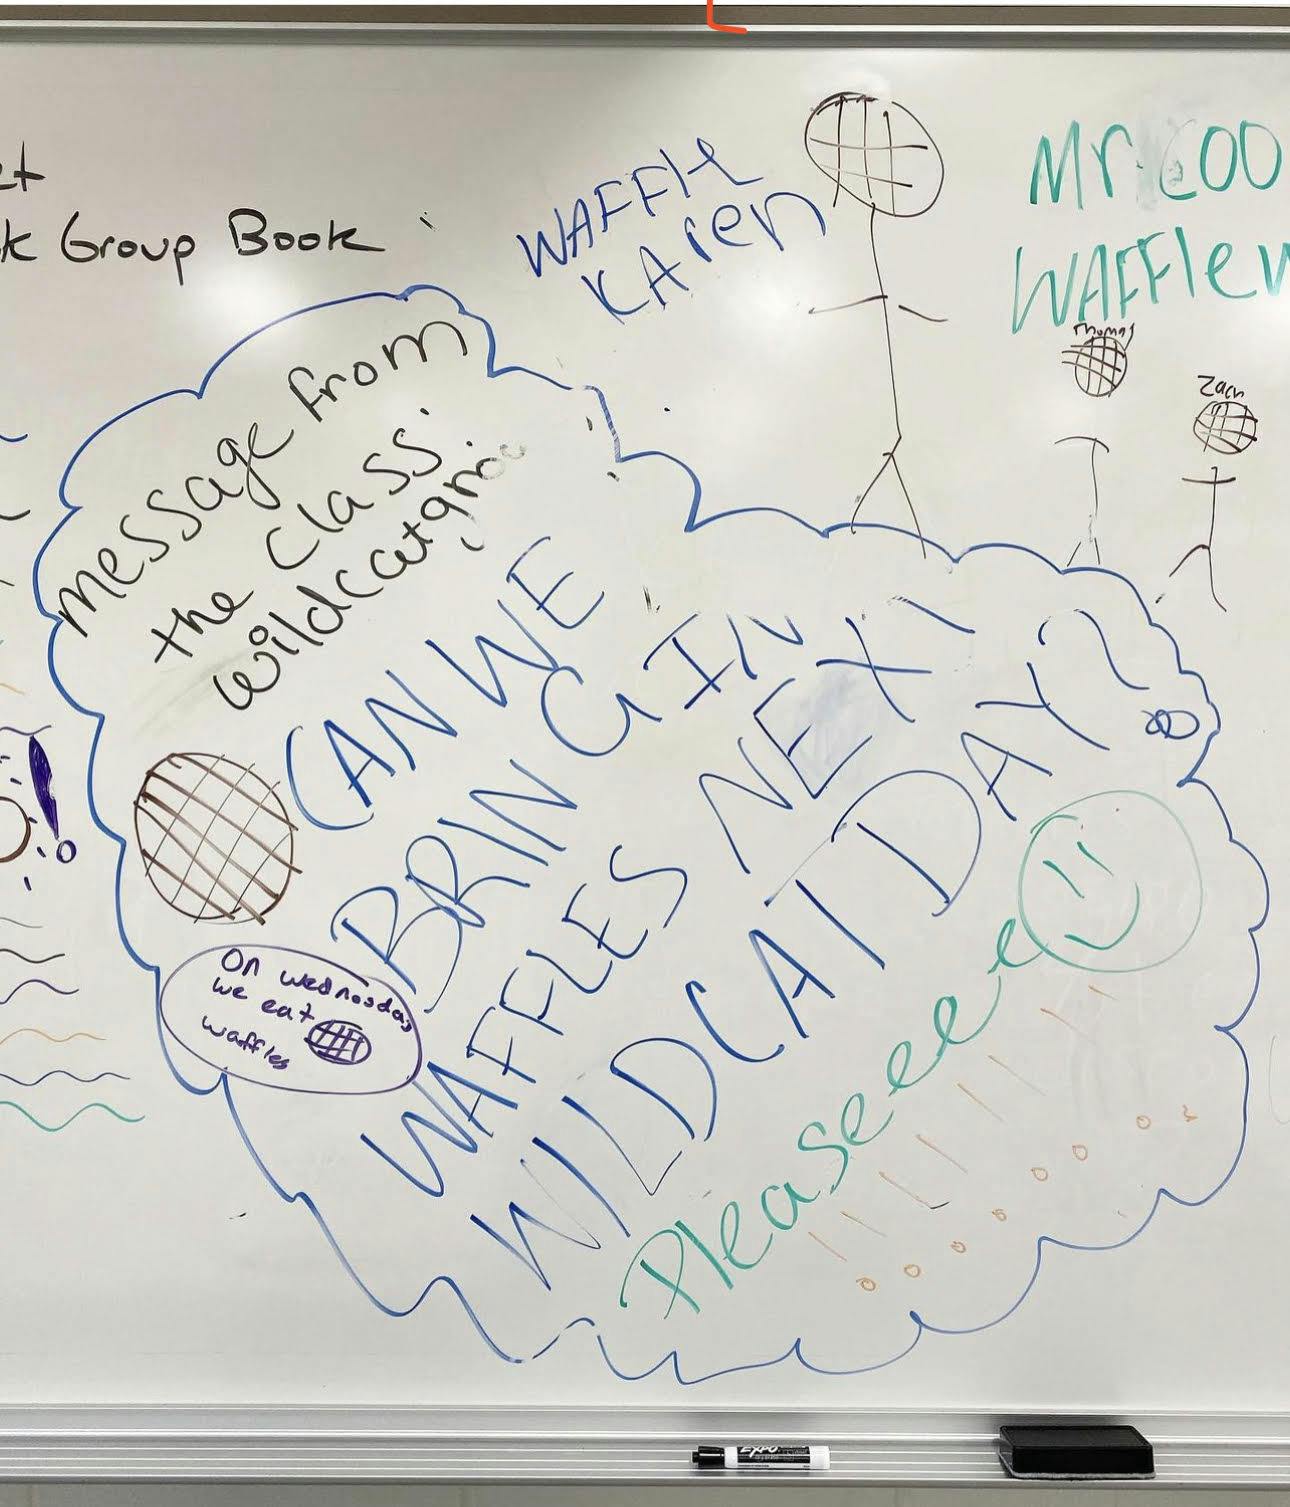 students' writing on school whiteboard